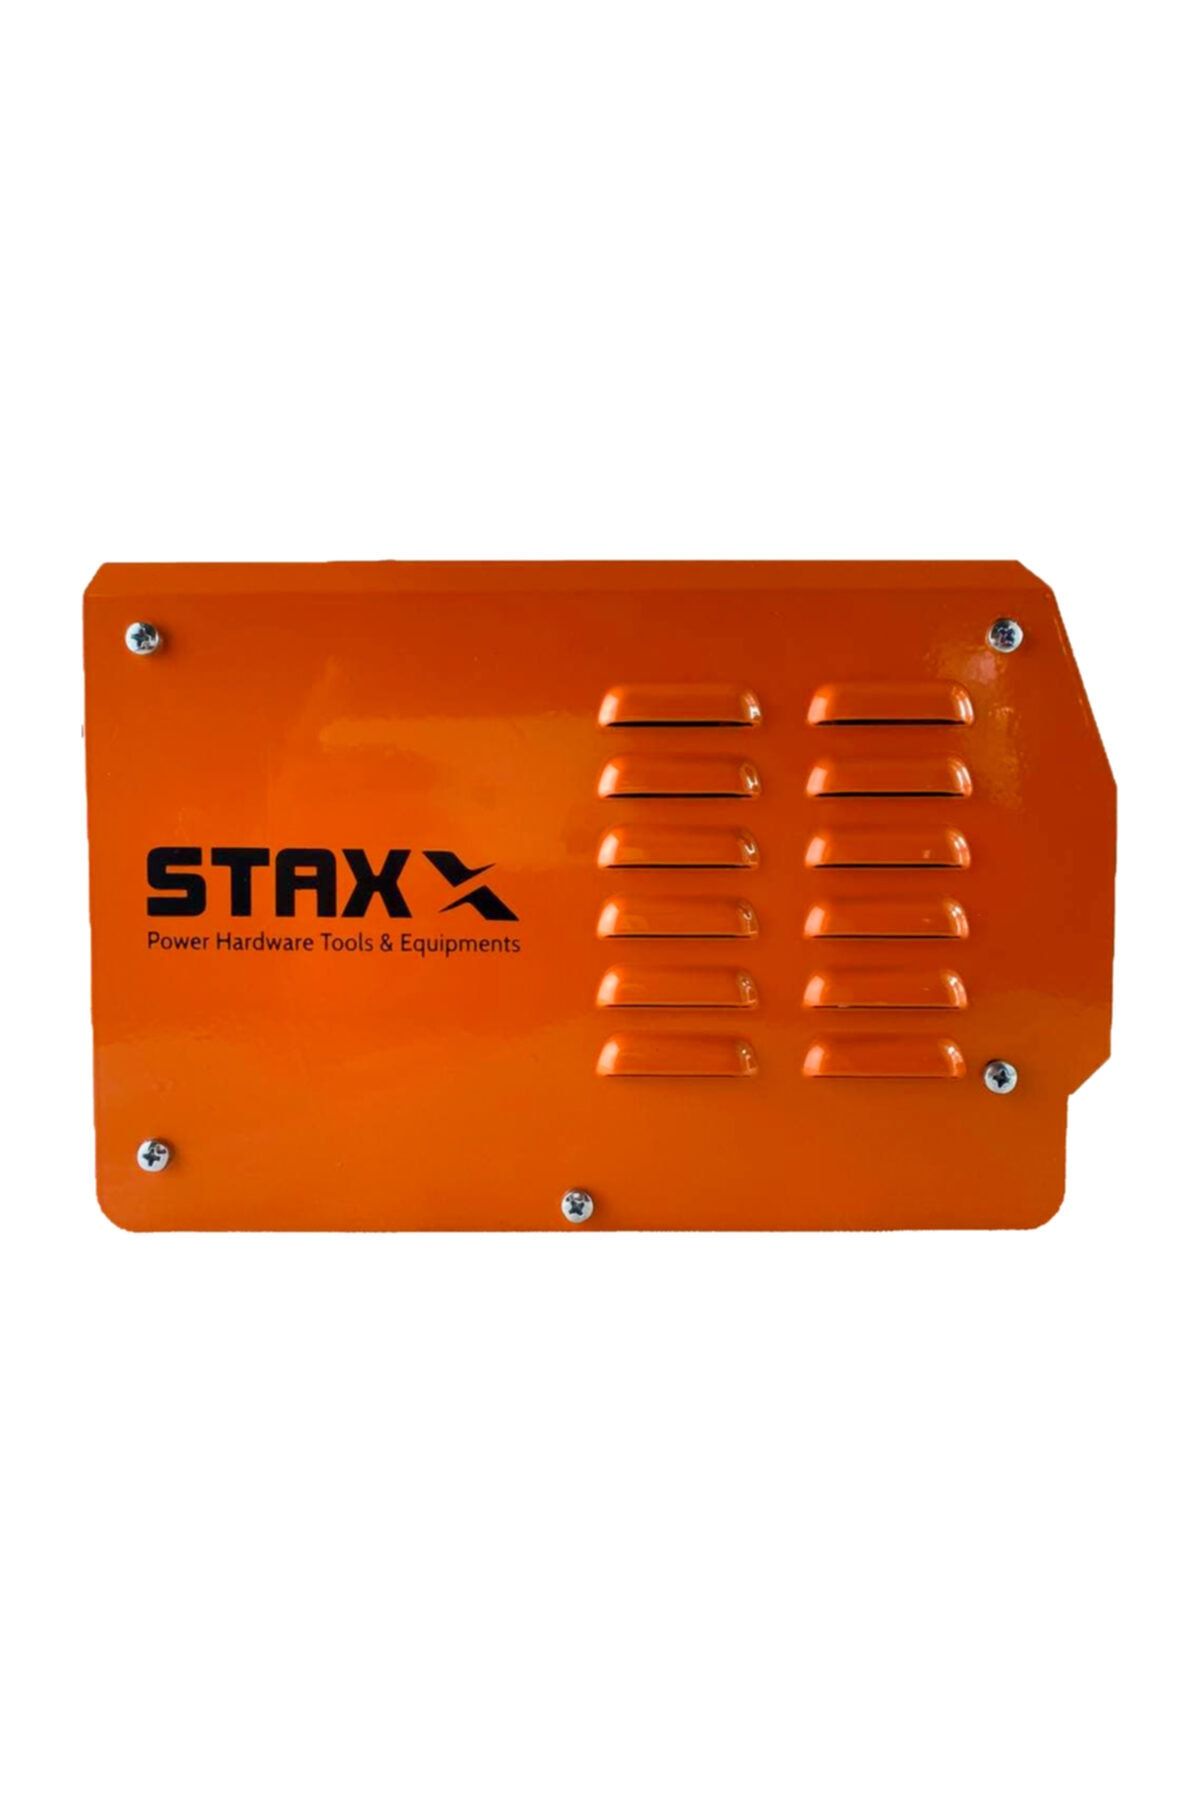 STAXX POWER Pro Mma 160 Amp Pro Dijital Göstergeli Çanta Invertör